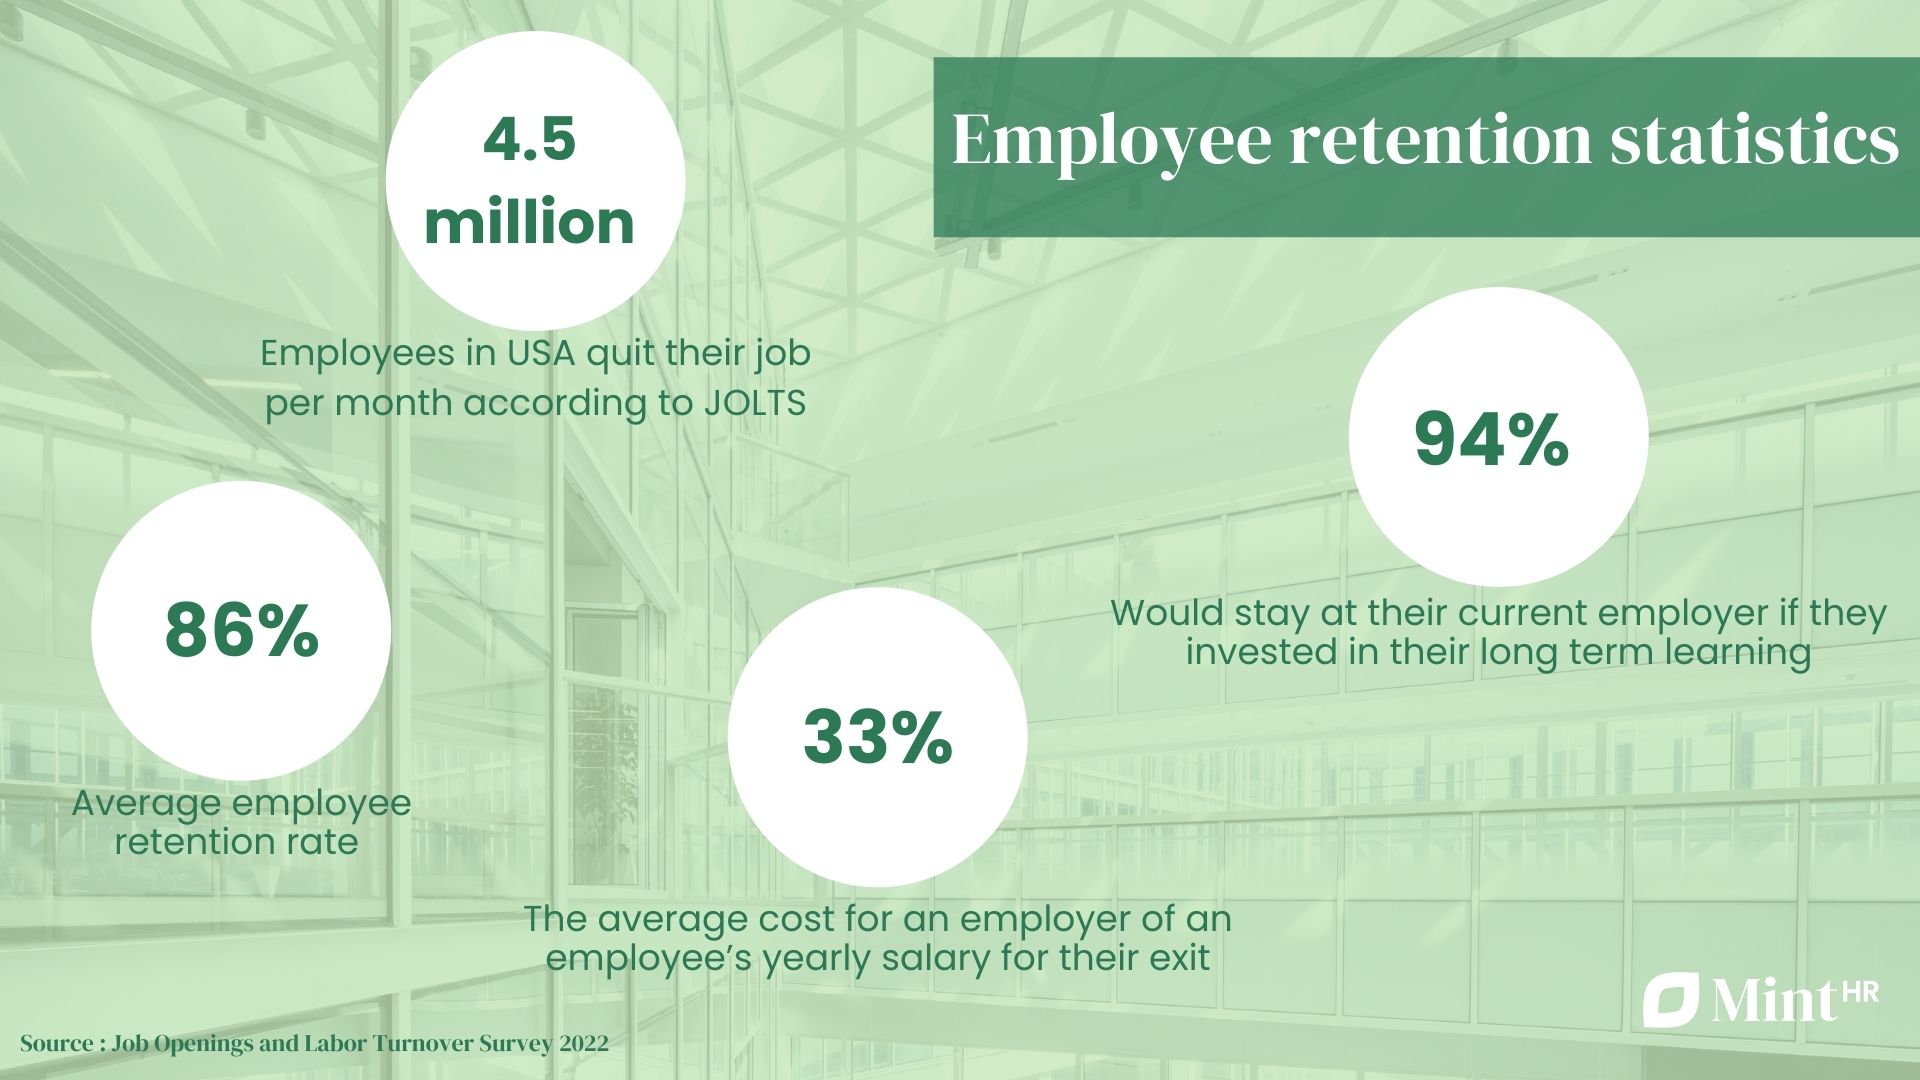 Employee retention statistics